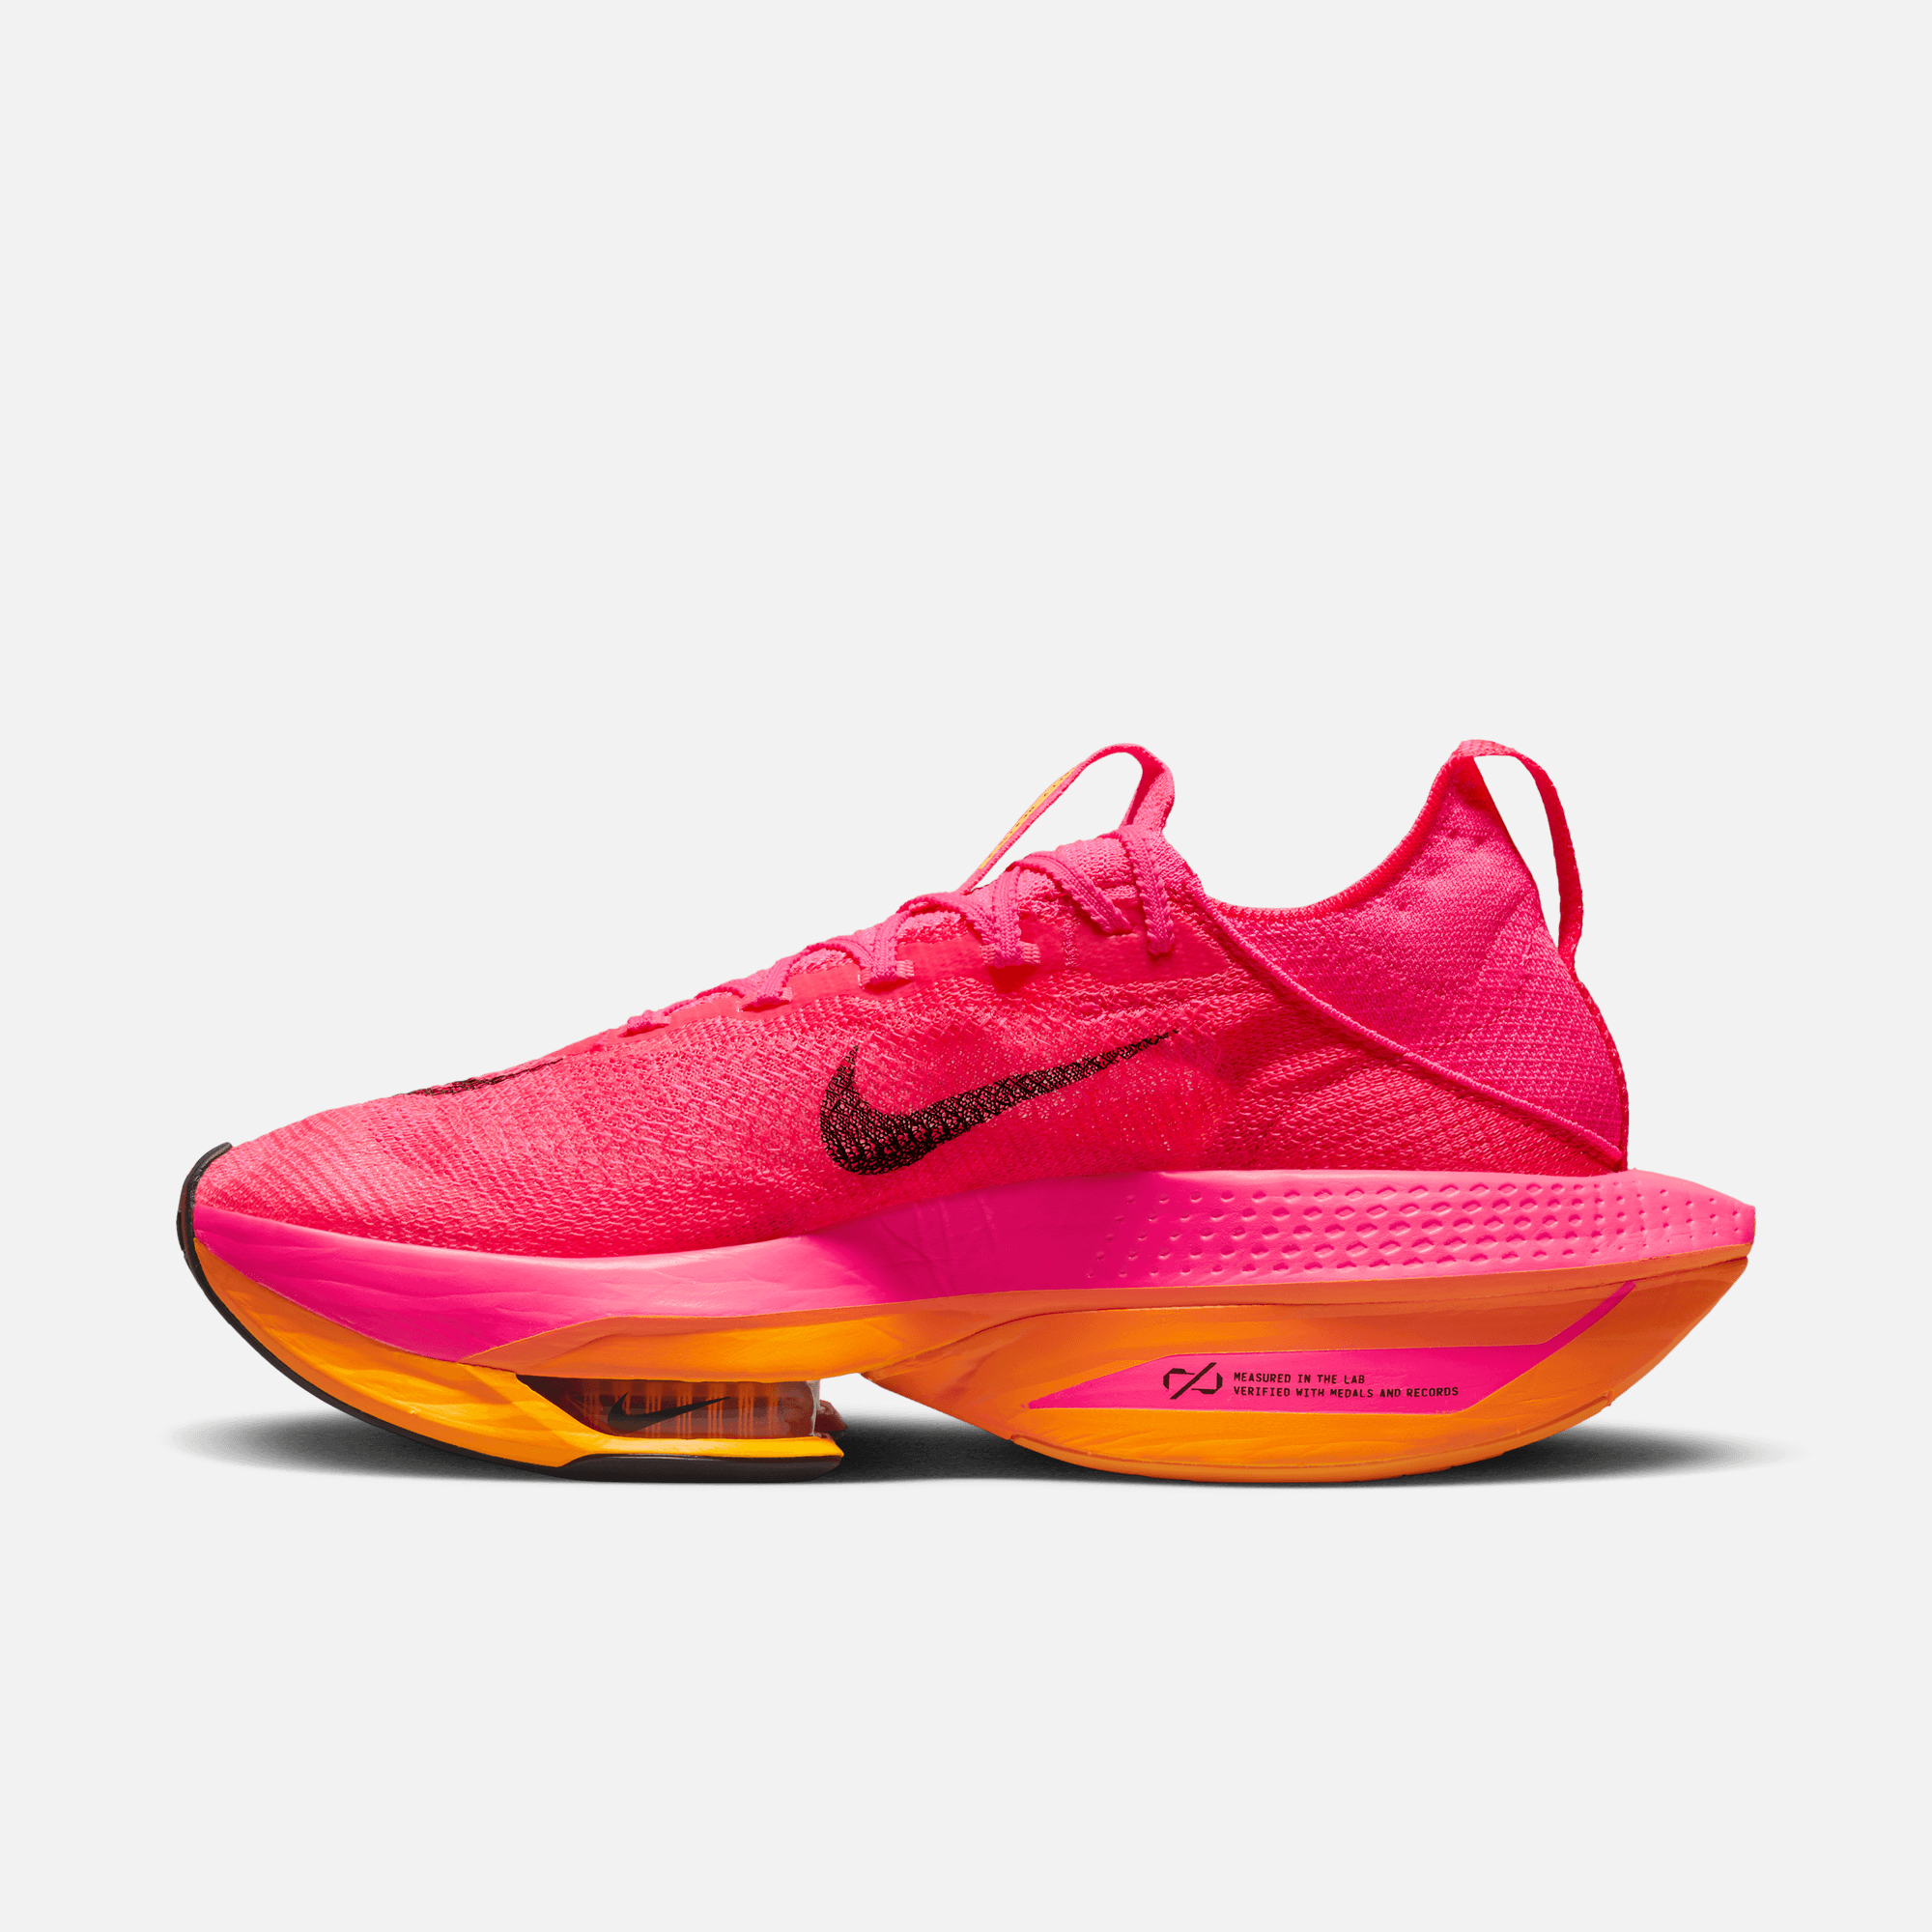 Nike Air Zoom Alphafly Next% 2 Hyper Pink